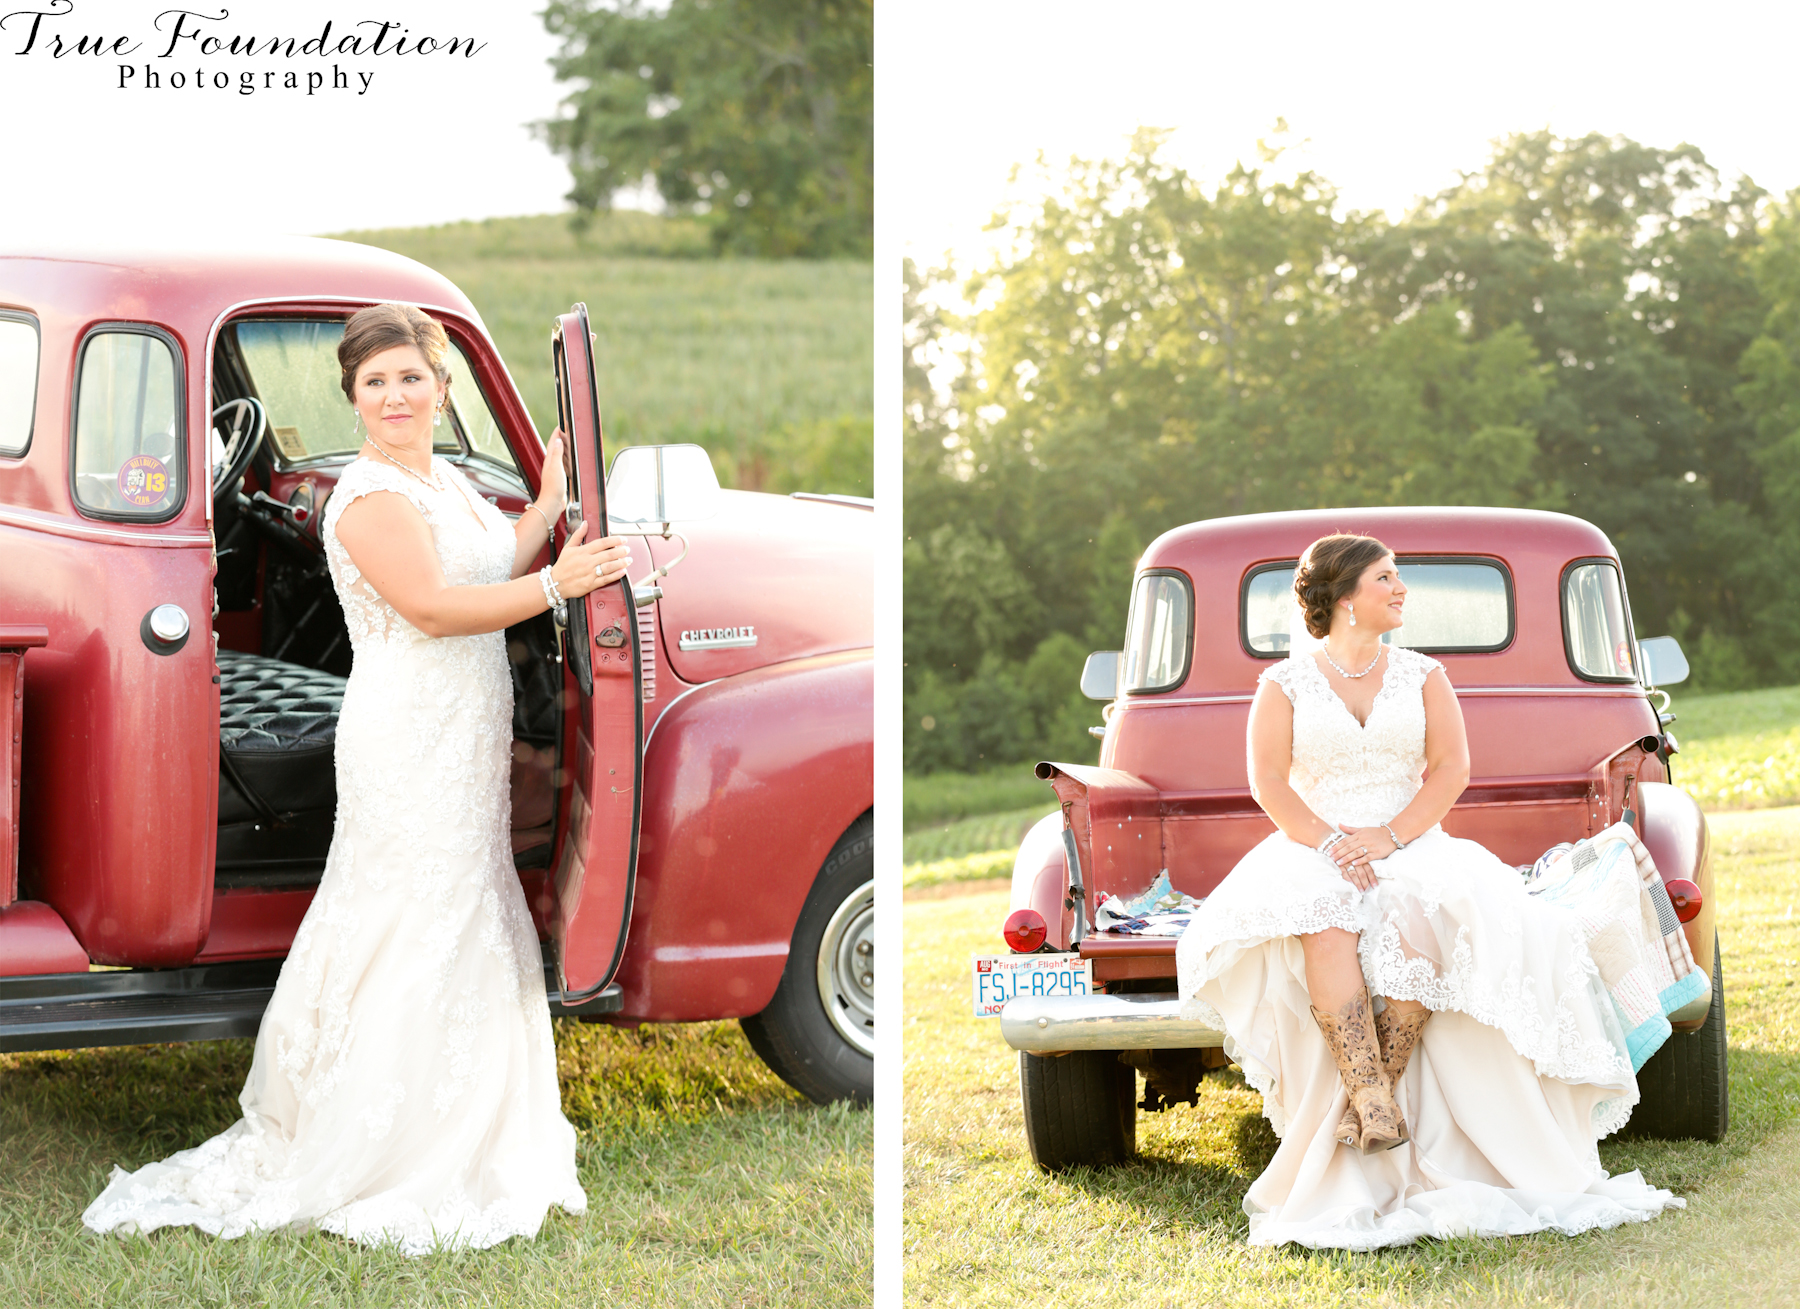 Bridal - Portrait - Photography - Photos - Hendersonville - NC - Shelby - Photographers - Farm - Country - Pinterest - Bride (20)